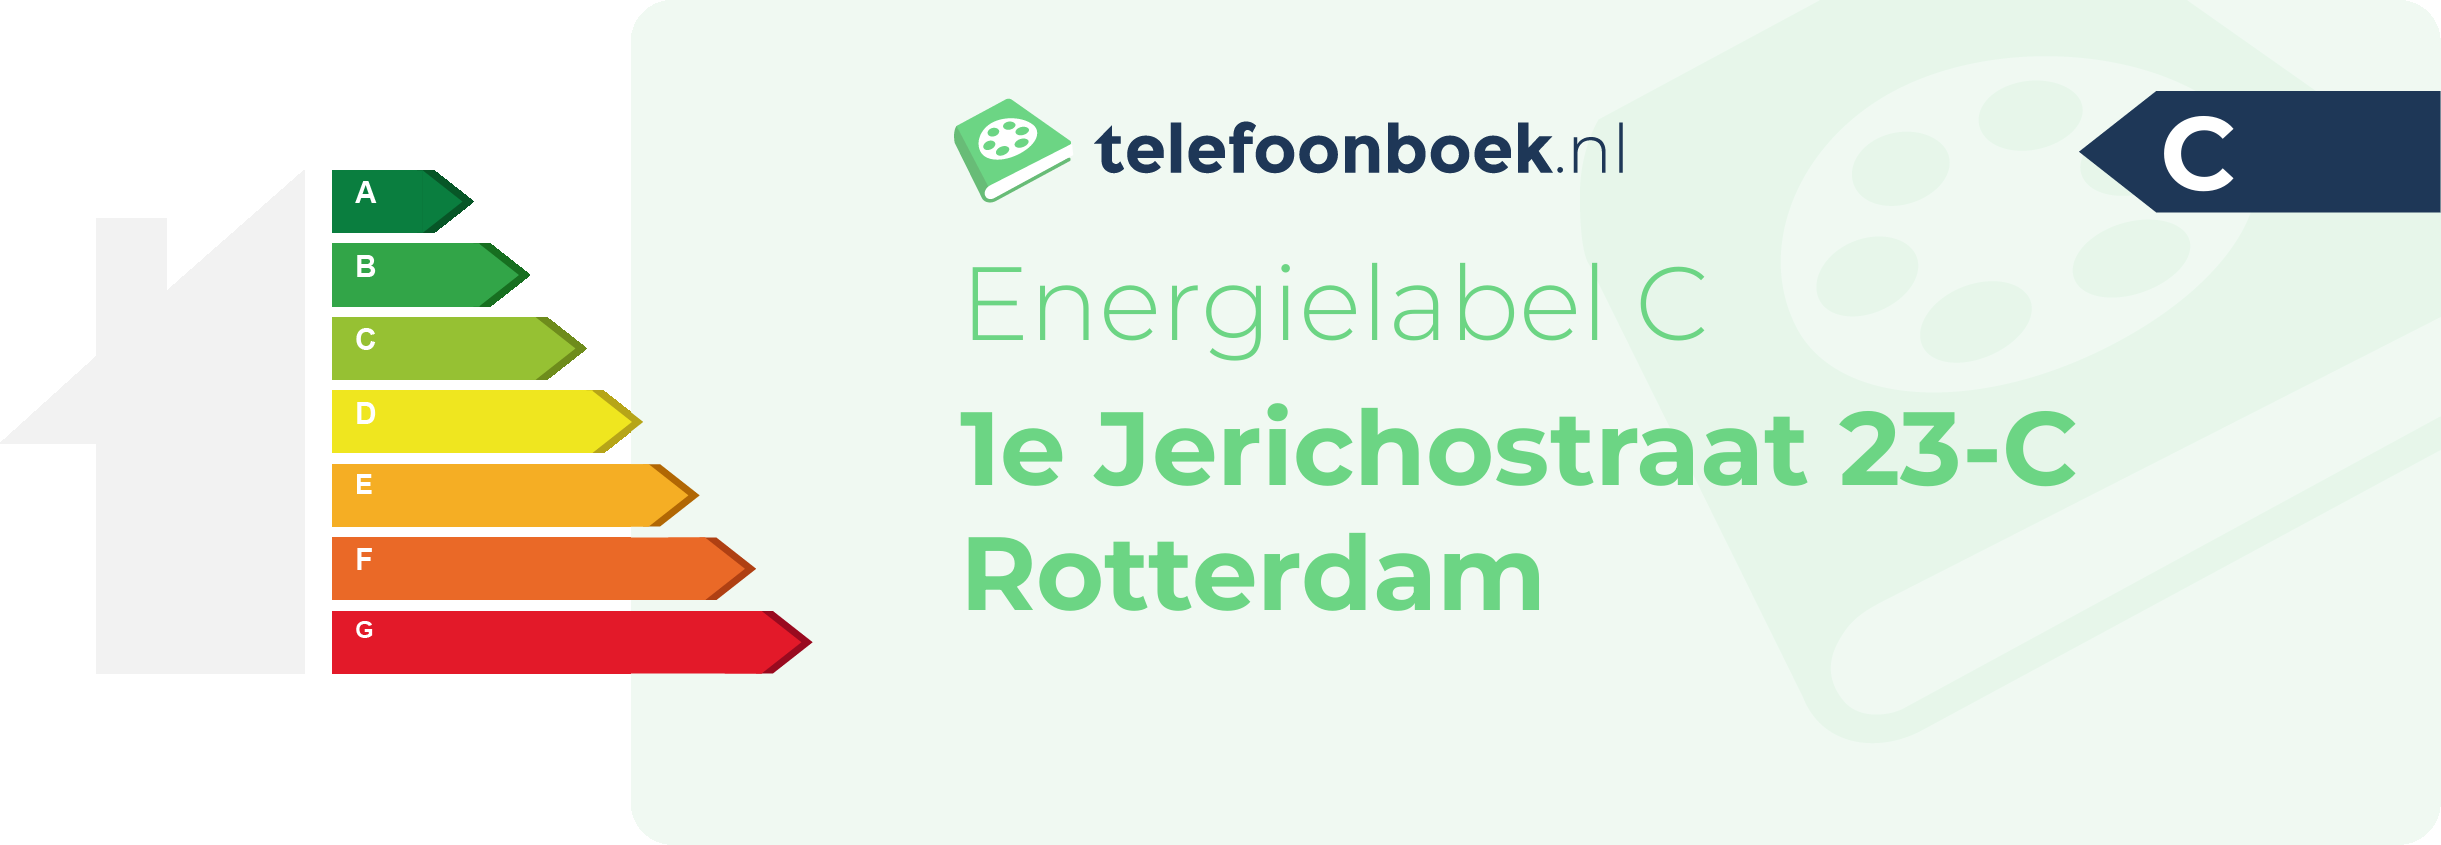 Energielabel 1e Jerichostraat 23-C Rotterdam